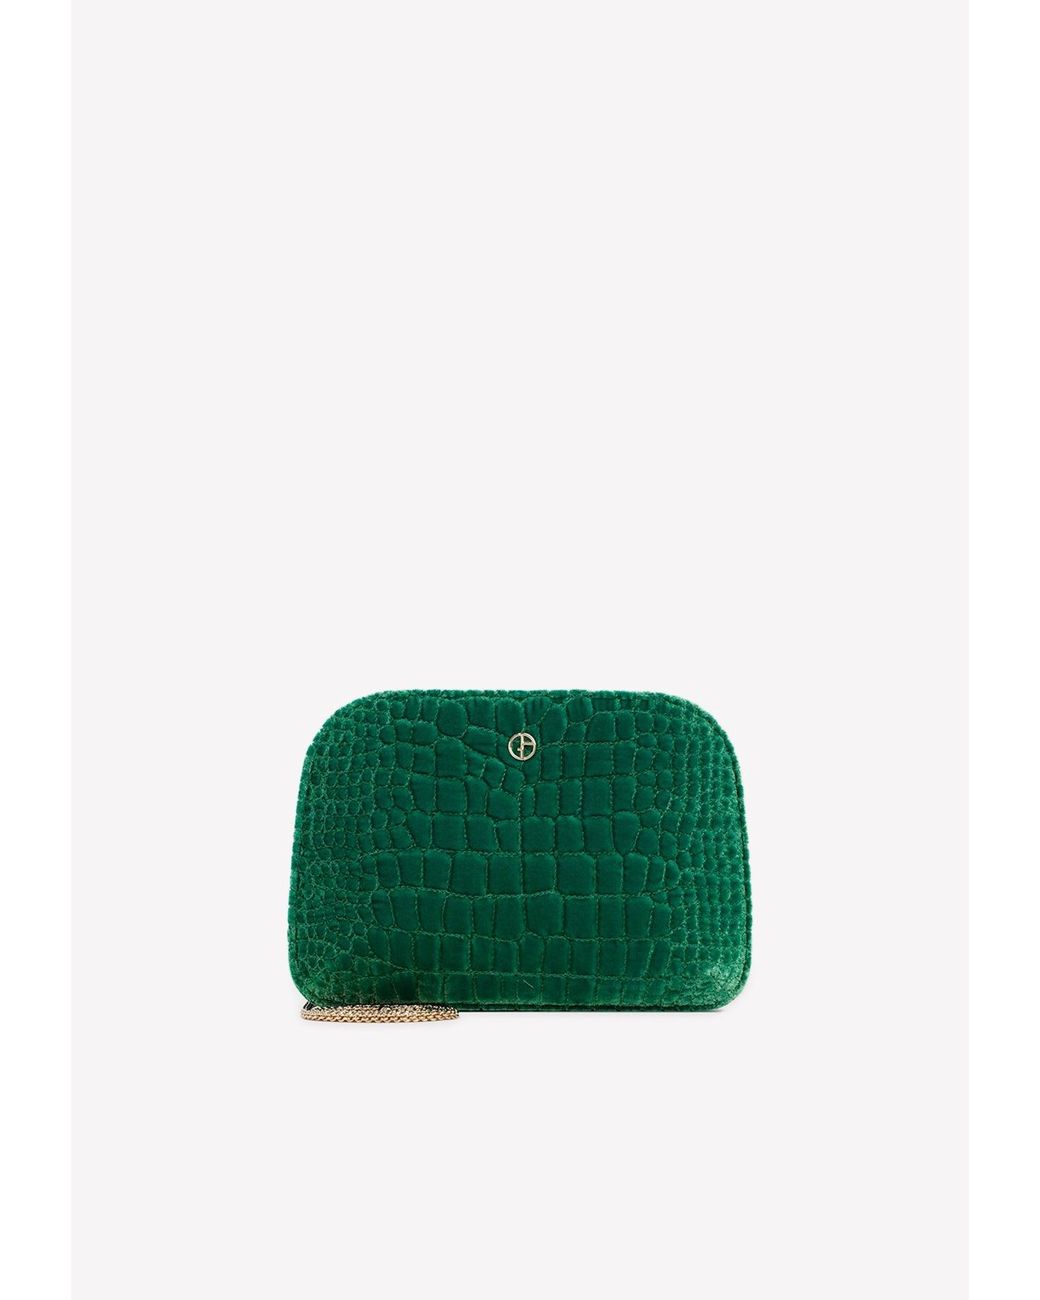 Giorgio Armani Small Clutch Bag in Green | Lyst Canada